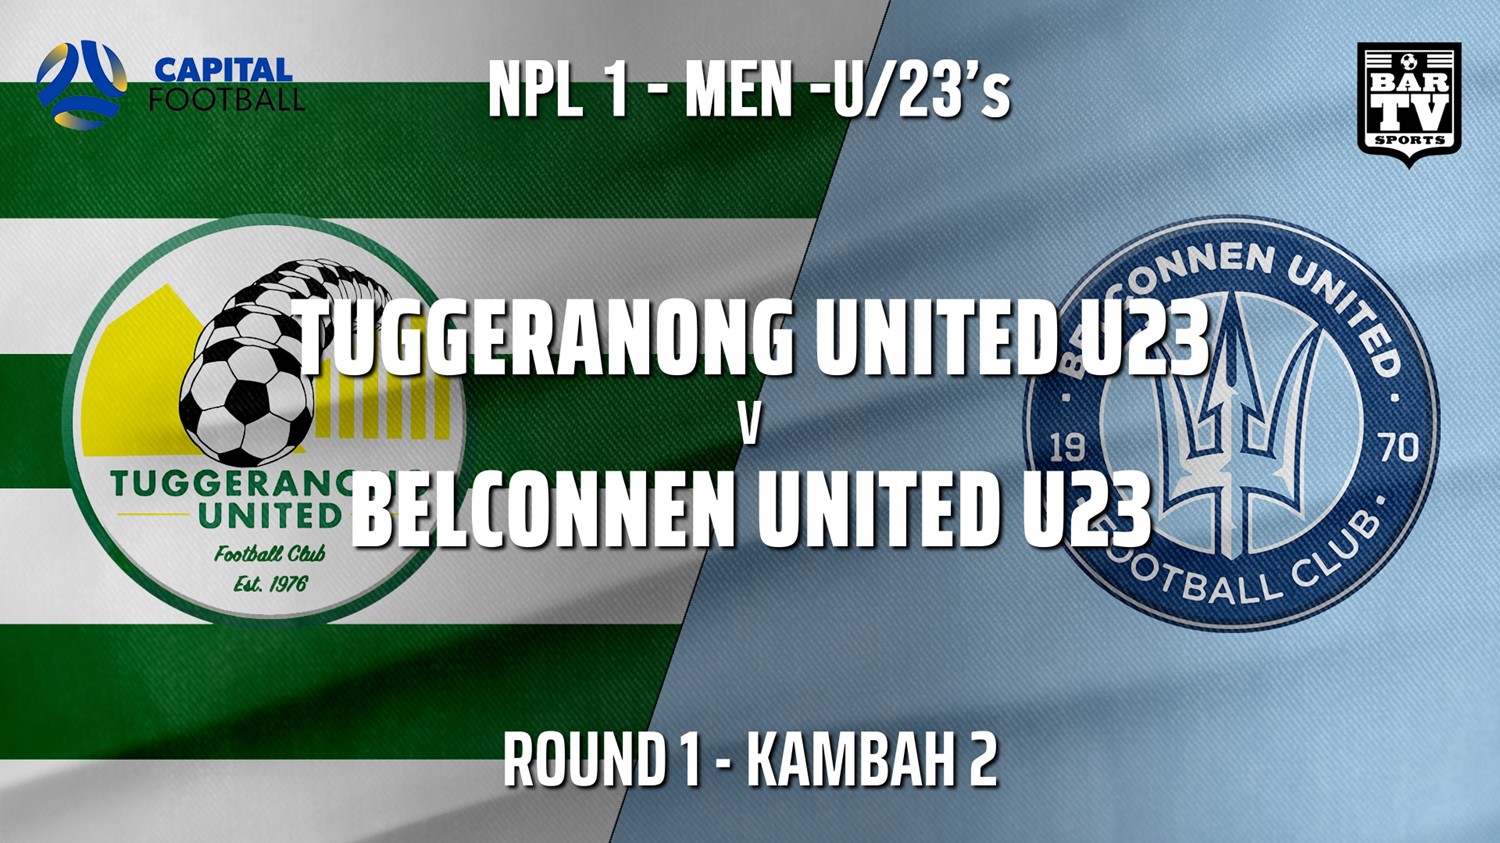 NPL1 Men - U23 - Capital Football  Round 1 - Tuggeranong United U23 v Belconnen United U23 Minigame Slate Image